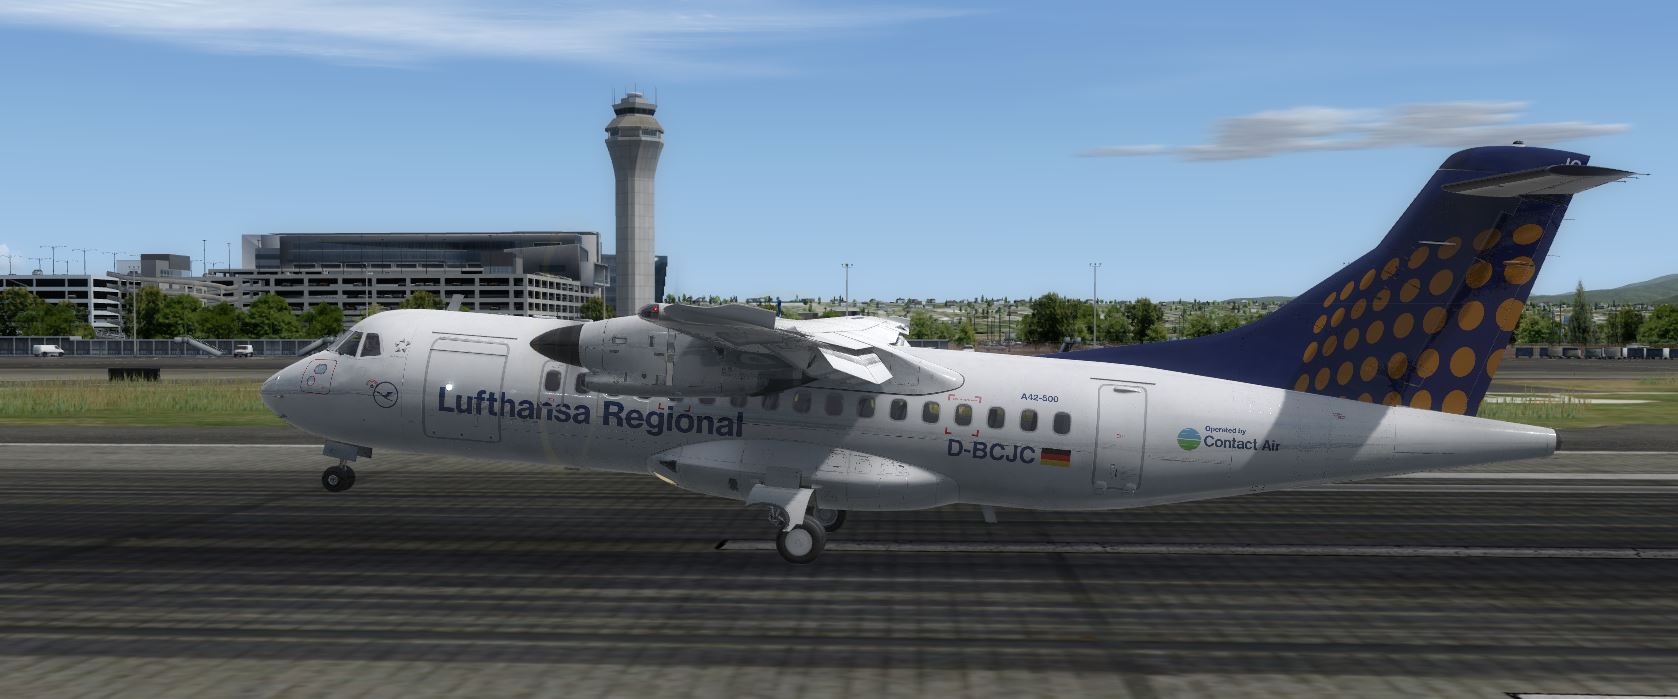 ATR42-500 Lufthansa-9093 